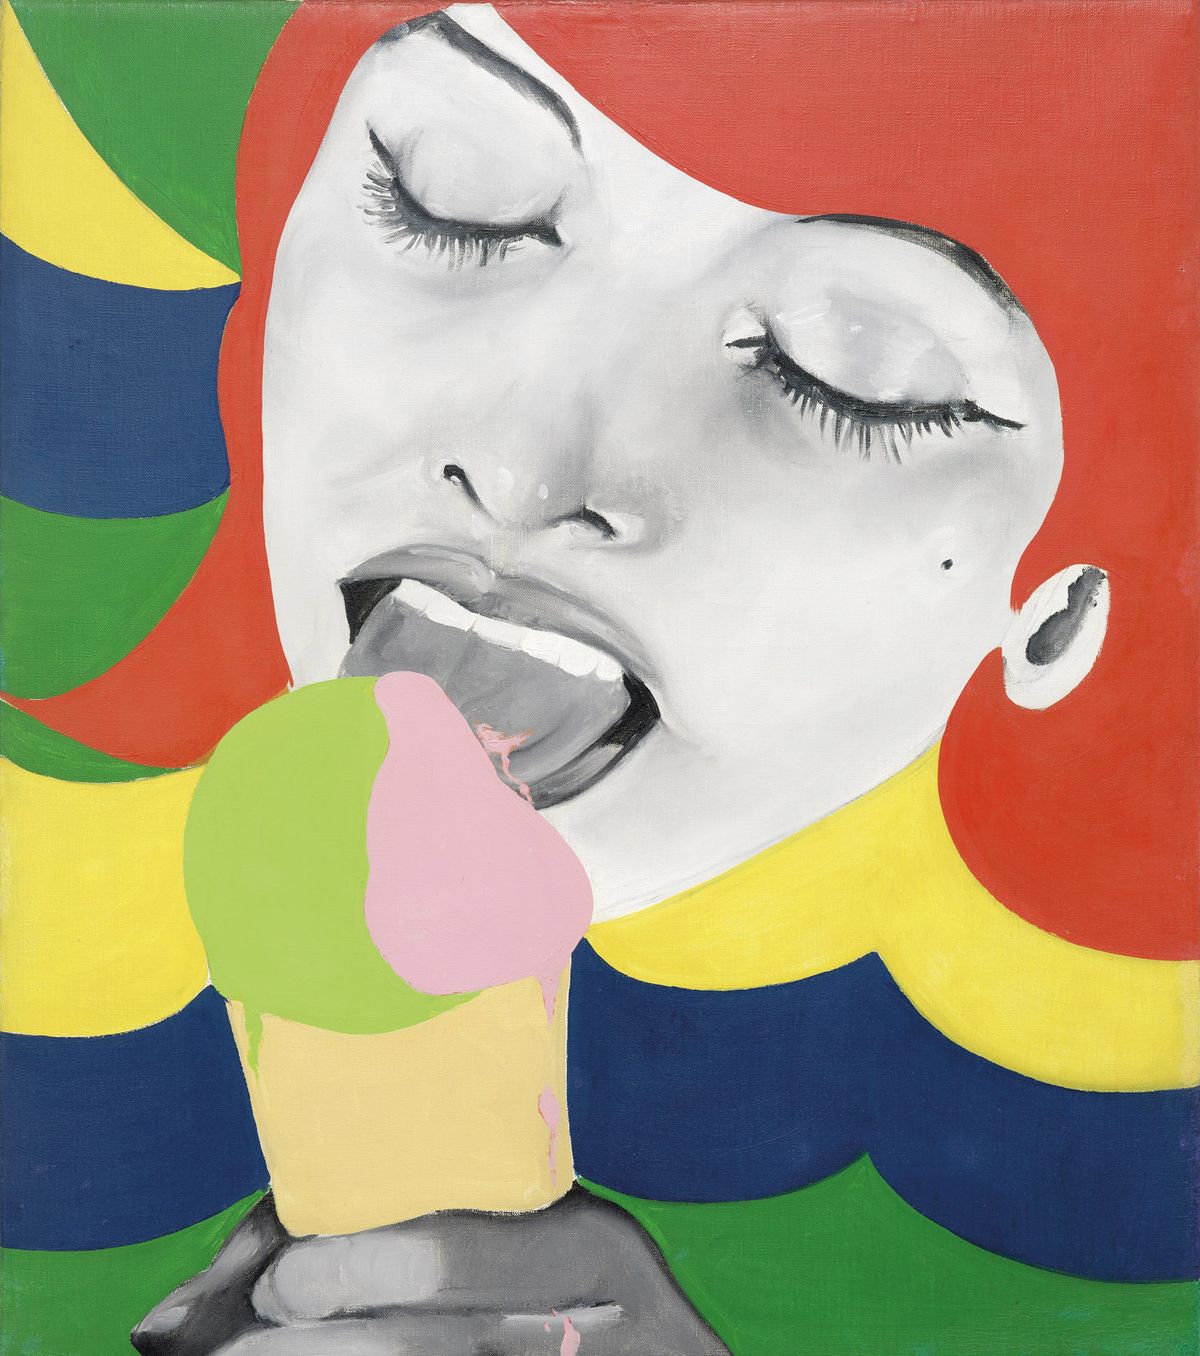 Ice Cream 1 (1964) by the Belgian Pop artist Evelyne Axell Courtesy of König Galerie